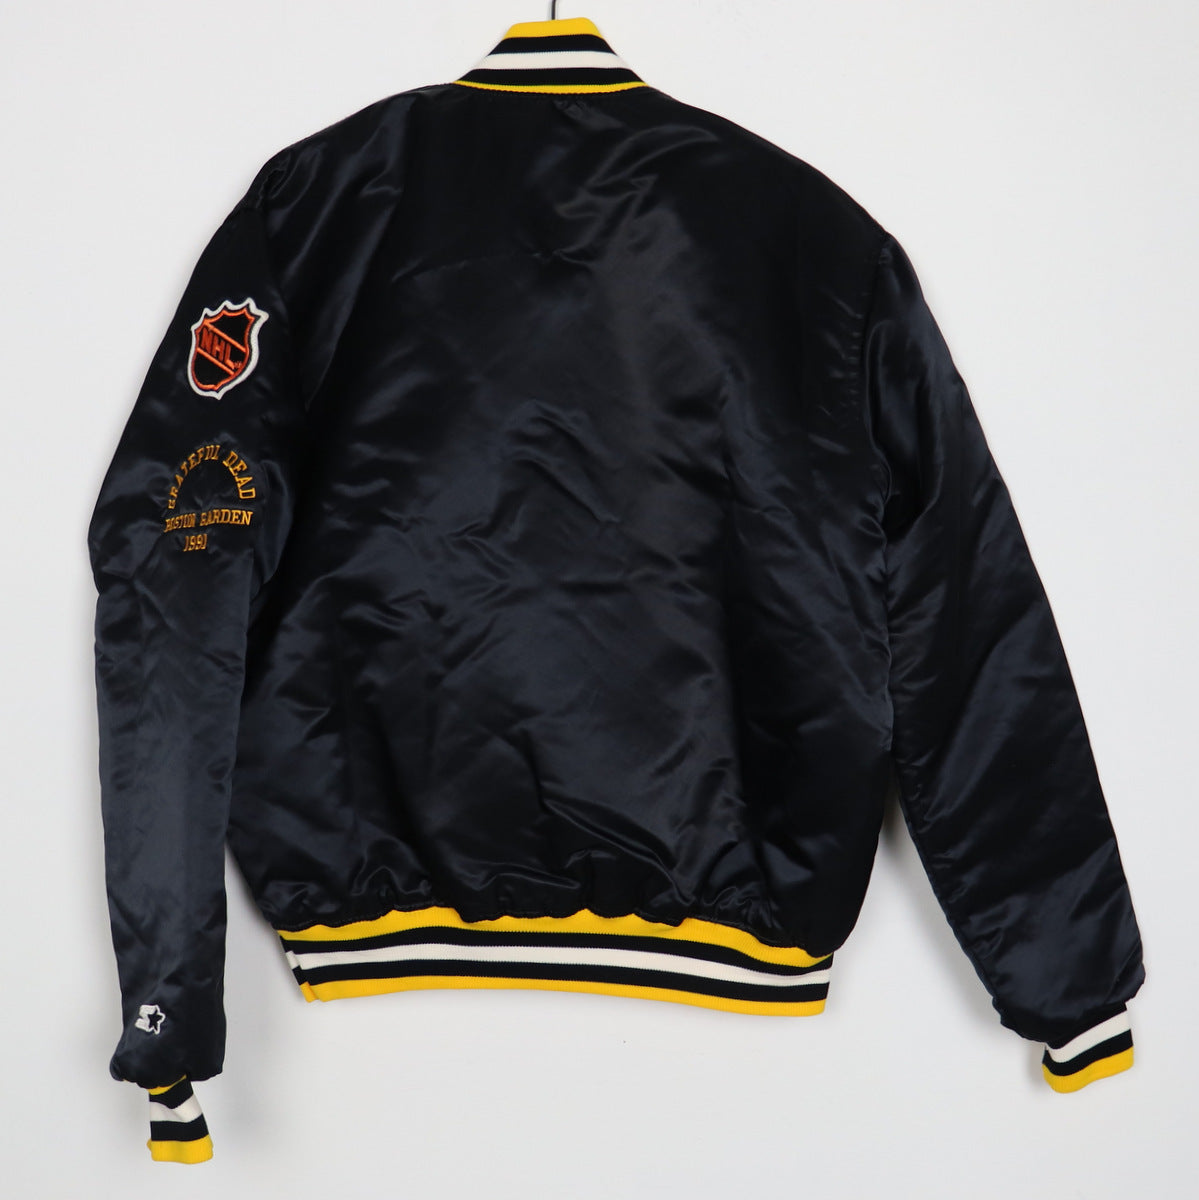 1991 Grateful Dead Boston Bruins Boston Garden Tour Jacket